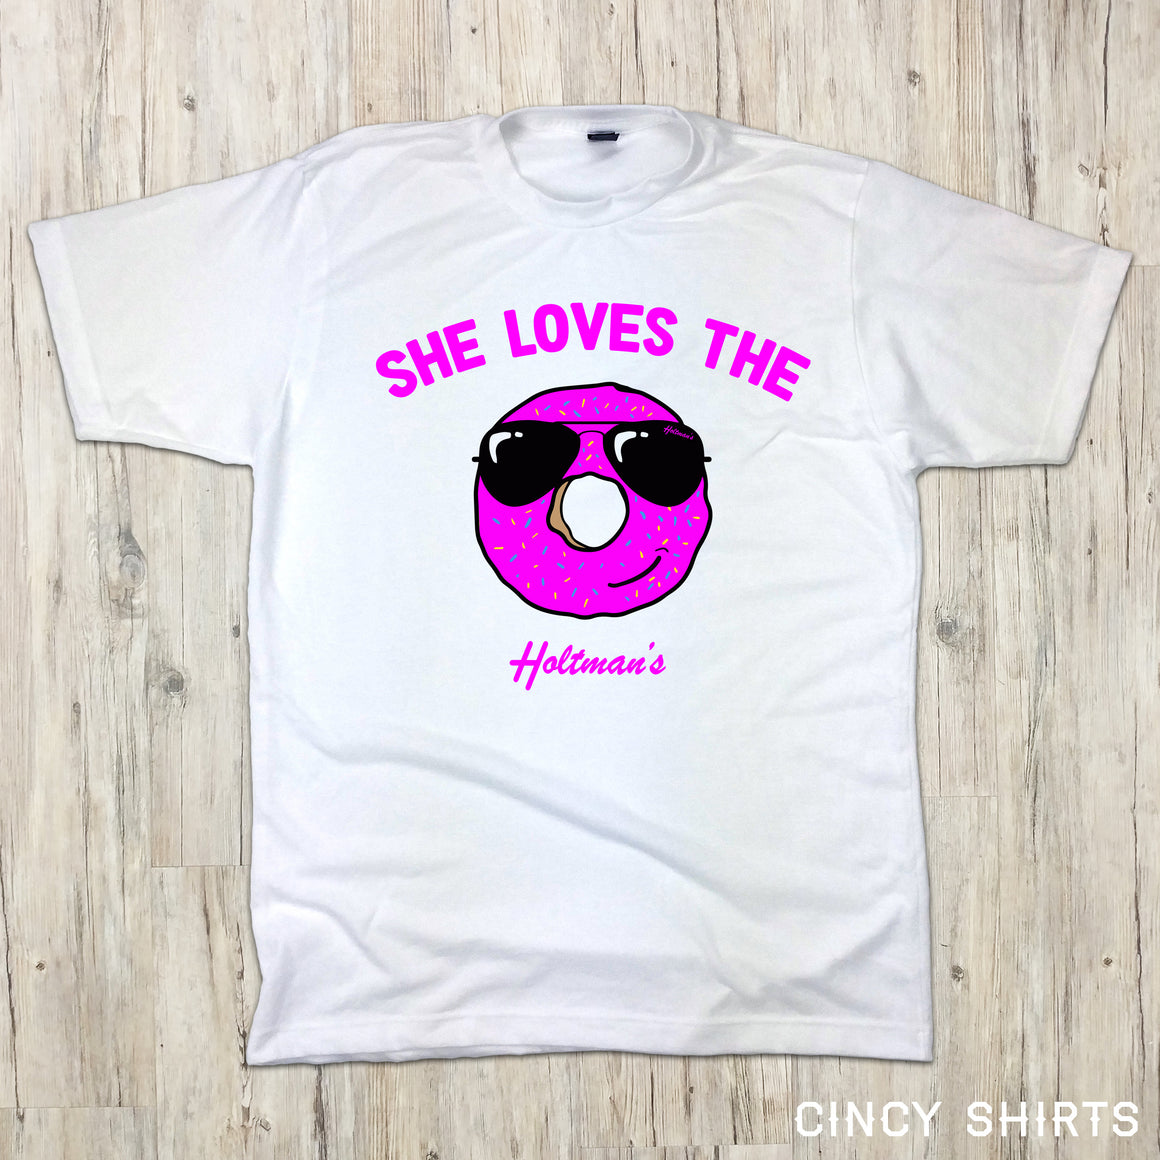 She Loves the "D" - Cincy Shirts